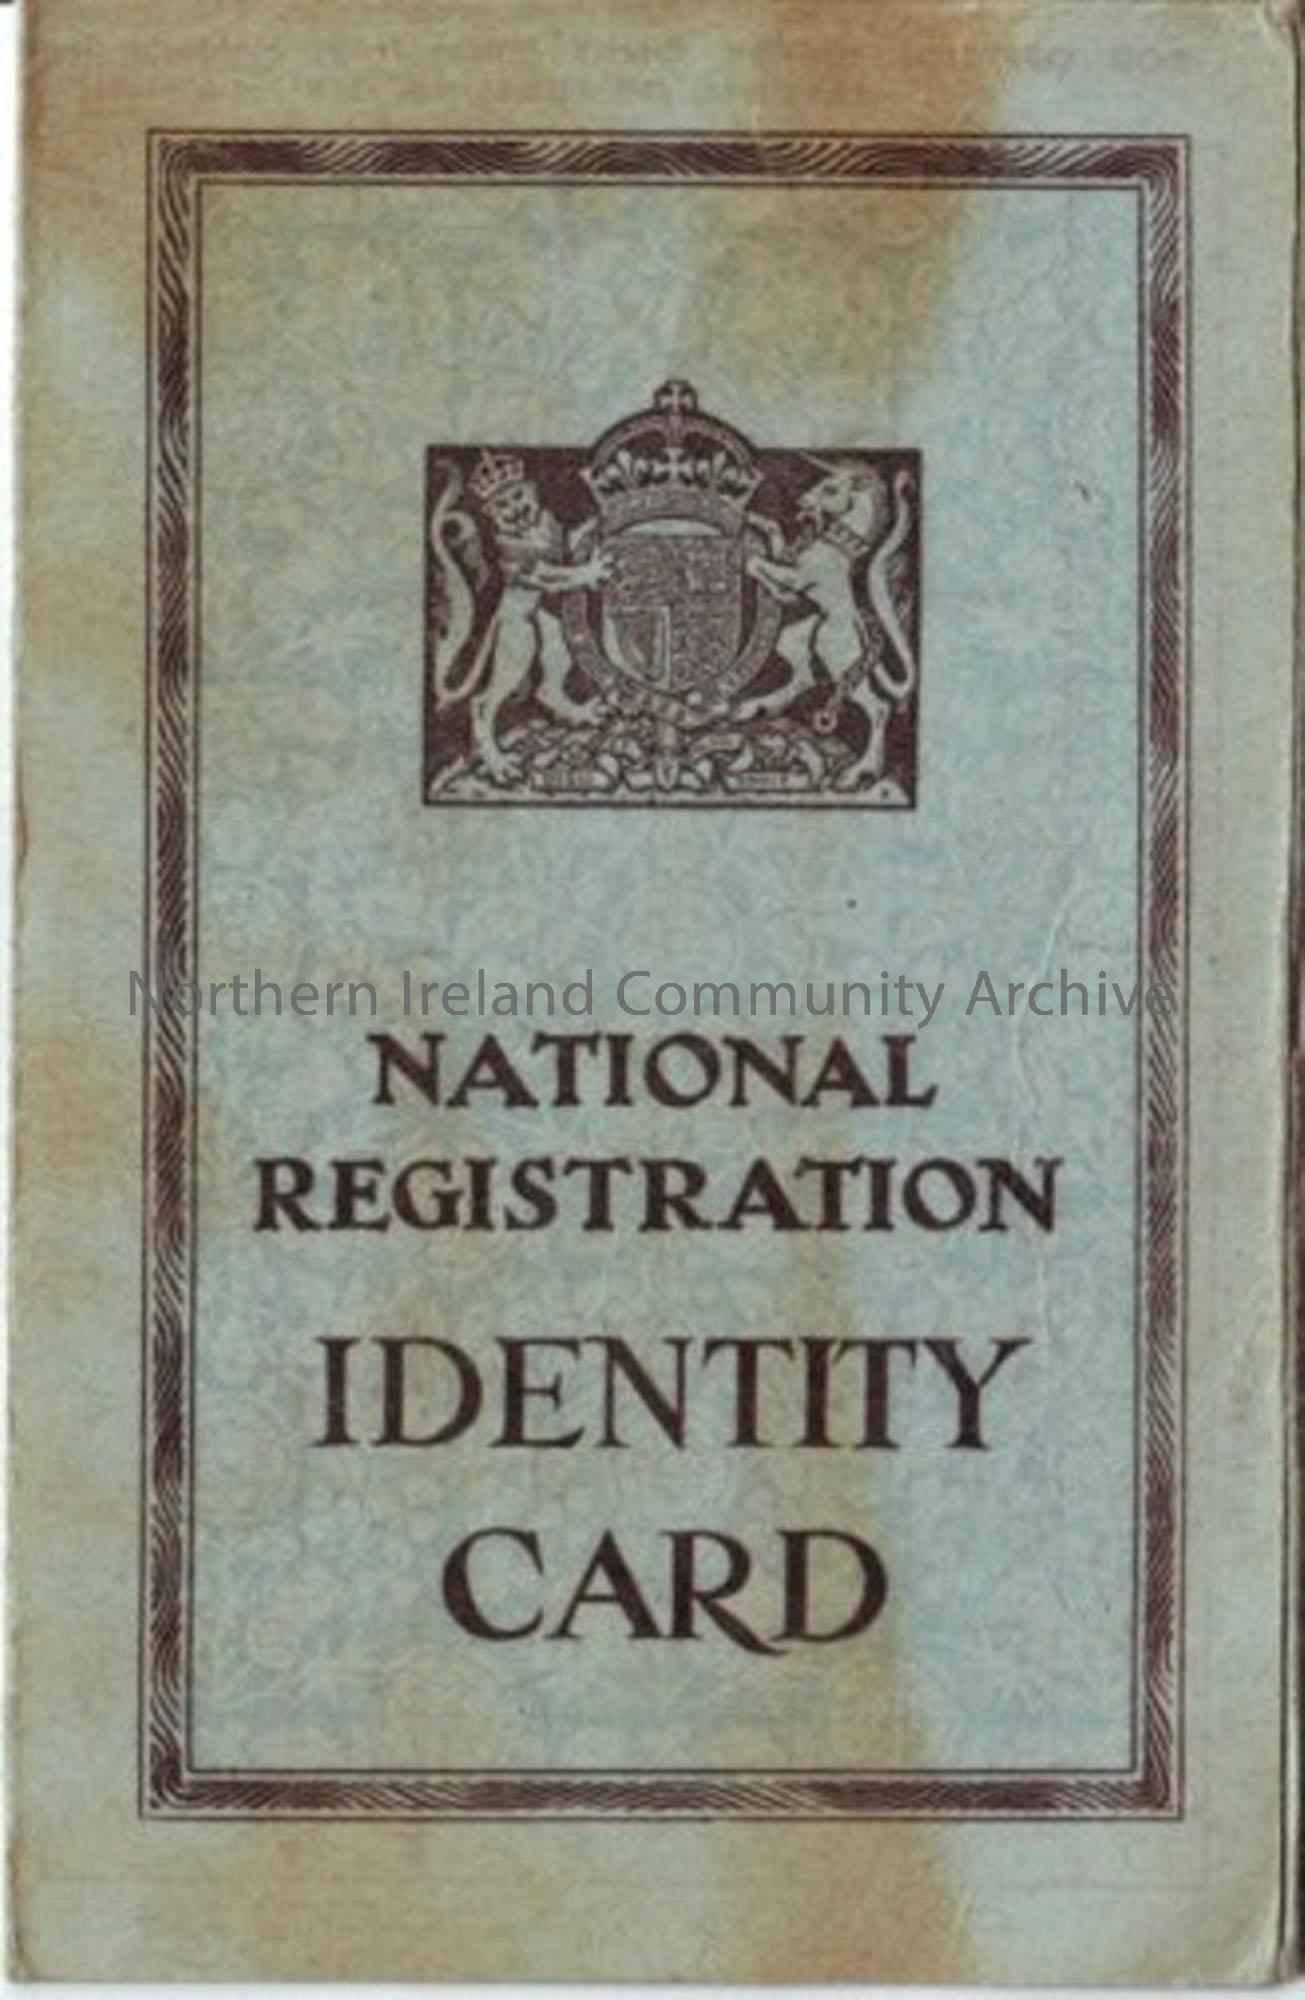 National Registration Identity Card for Ellen D.L. Thomas